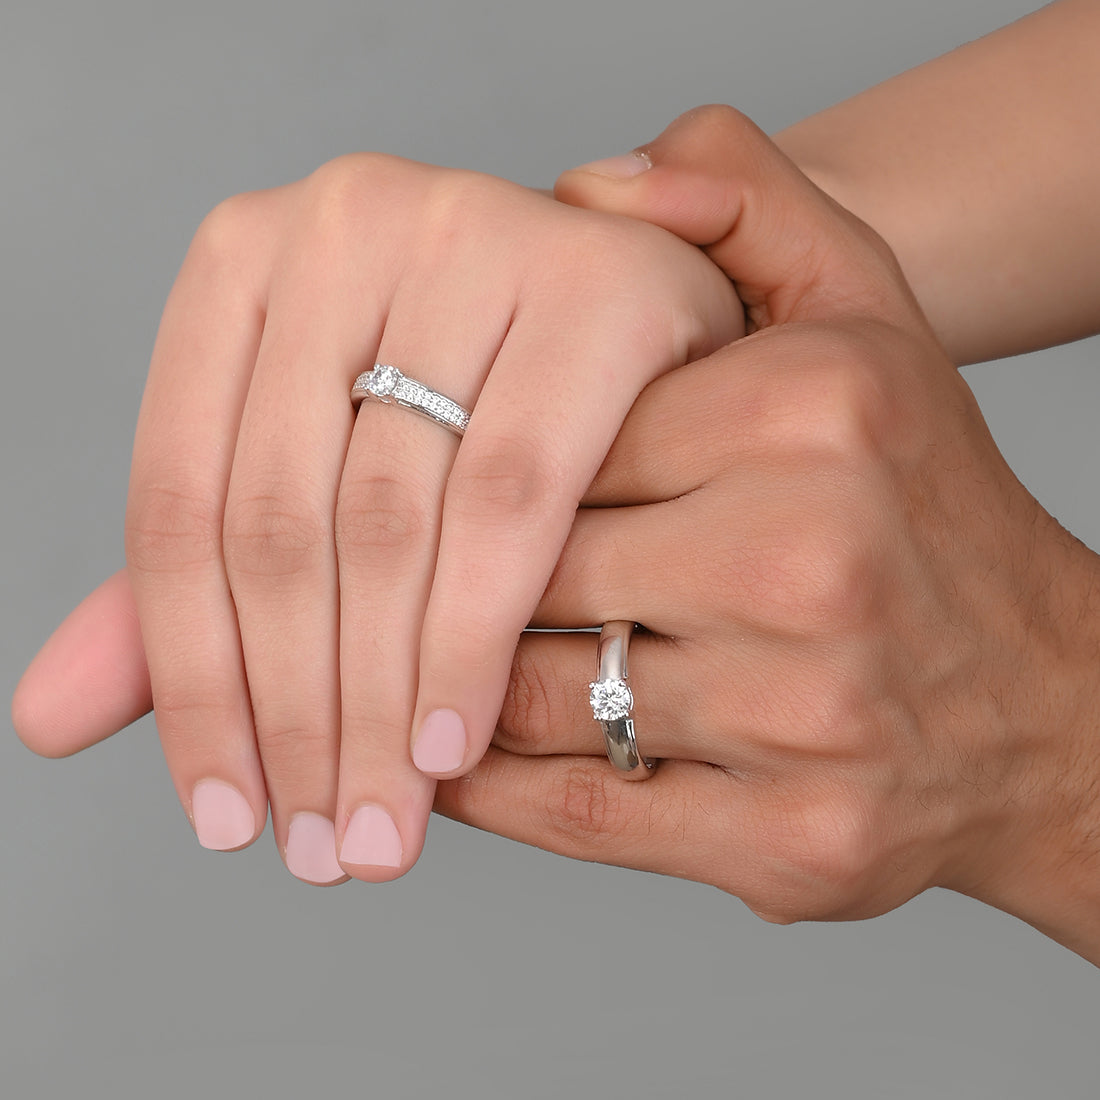 Can Men Wear Engagement Rings? - Sandberg Jewelers